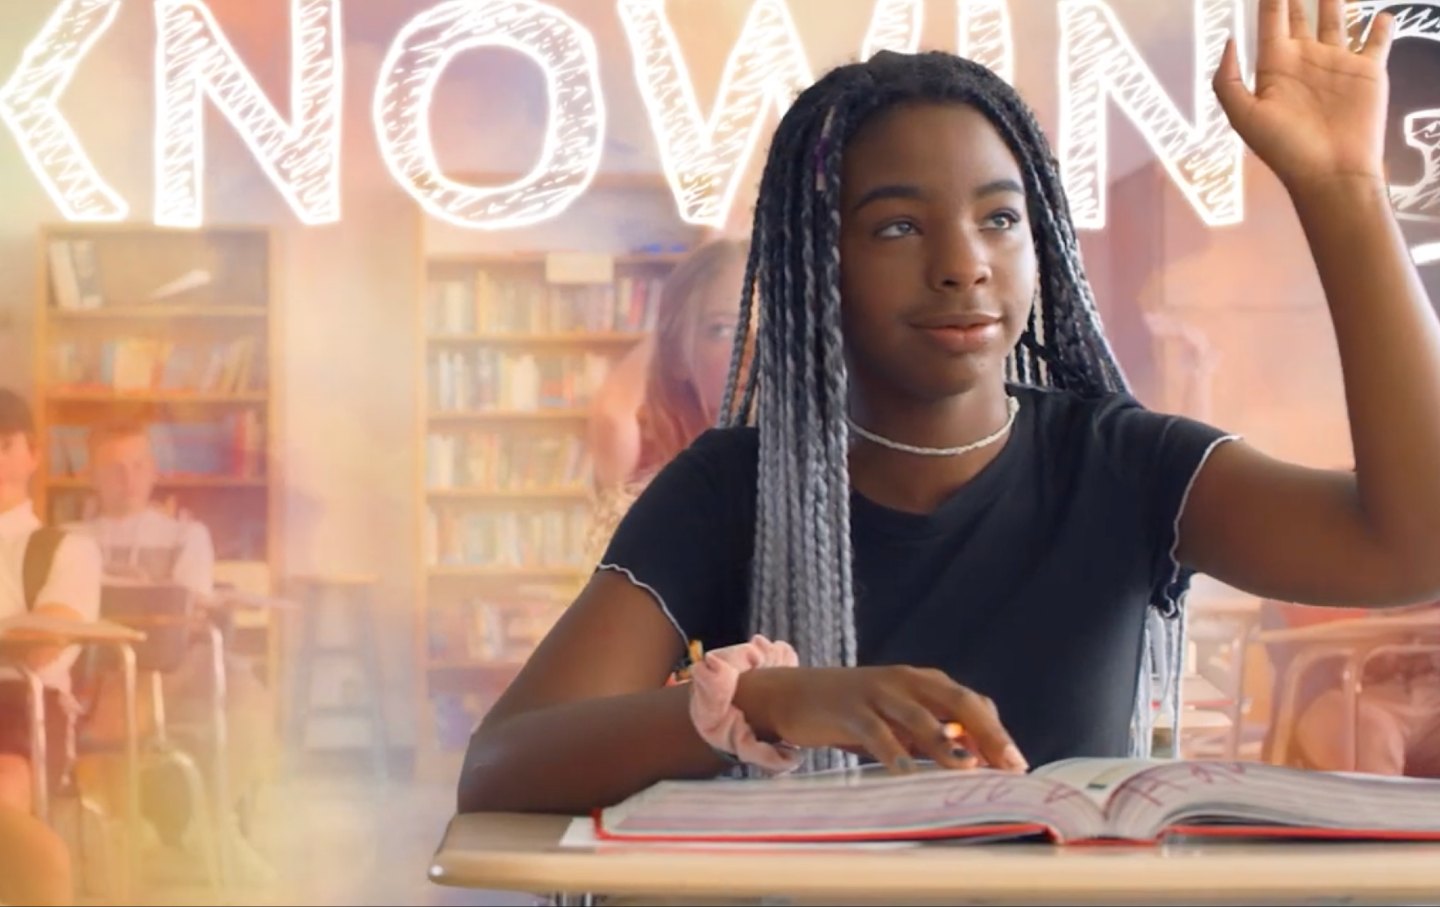 A still from an EducateUS ad, showing a Black teen raising her hand.